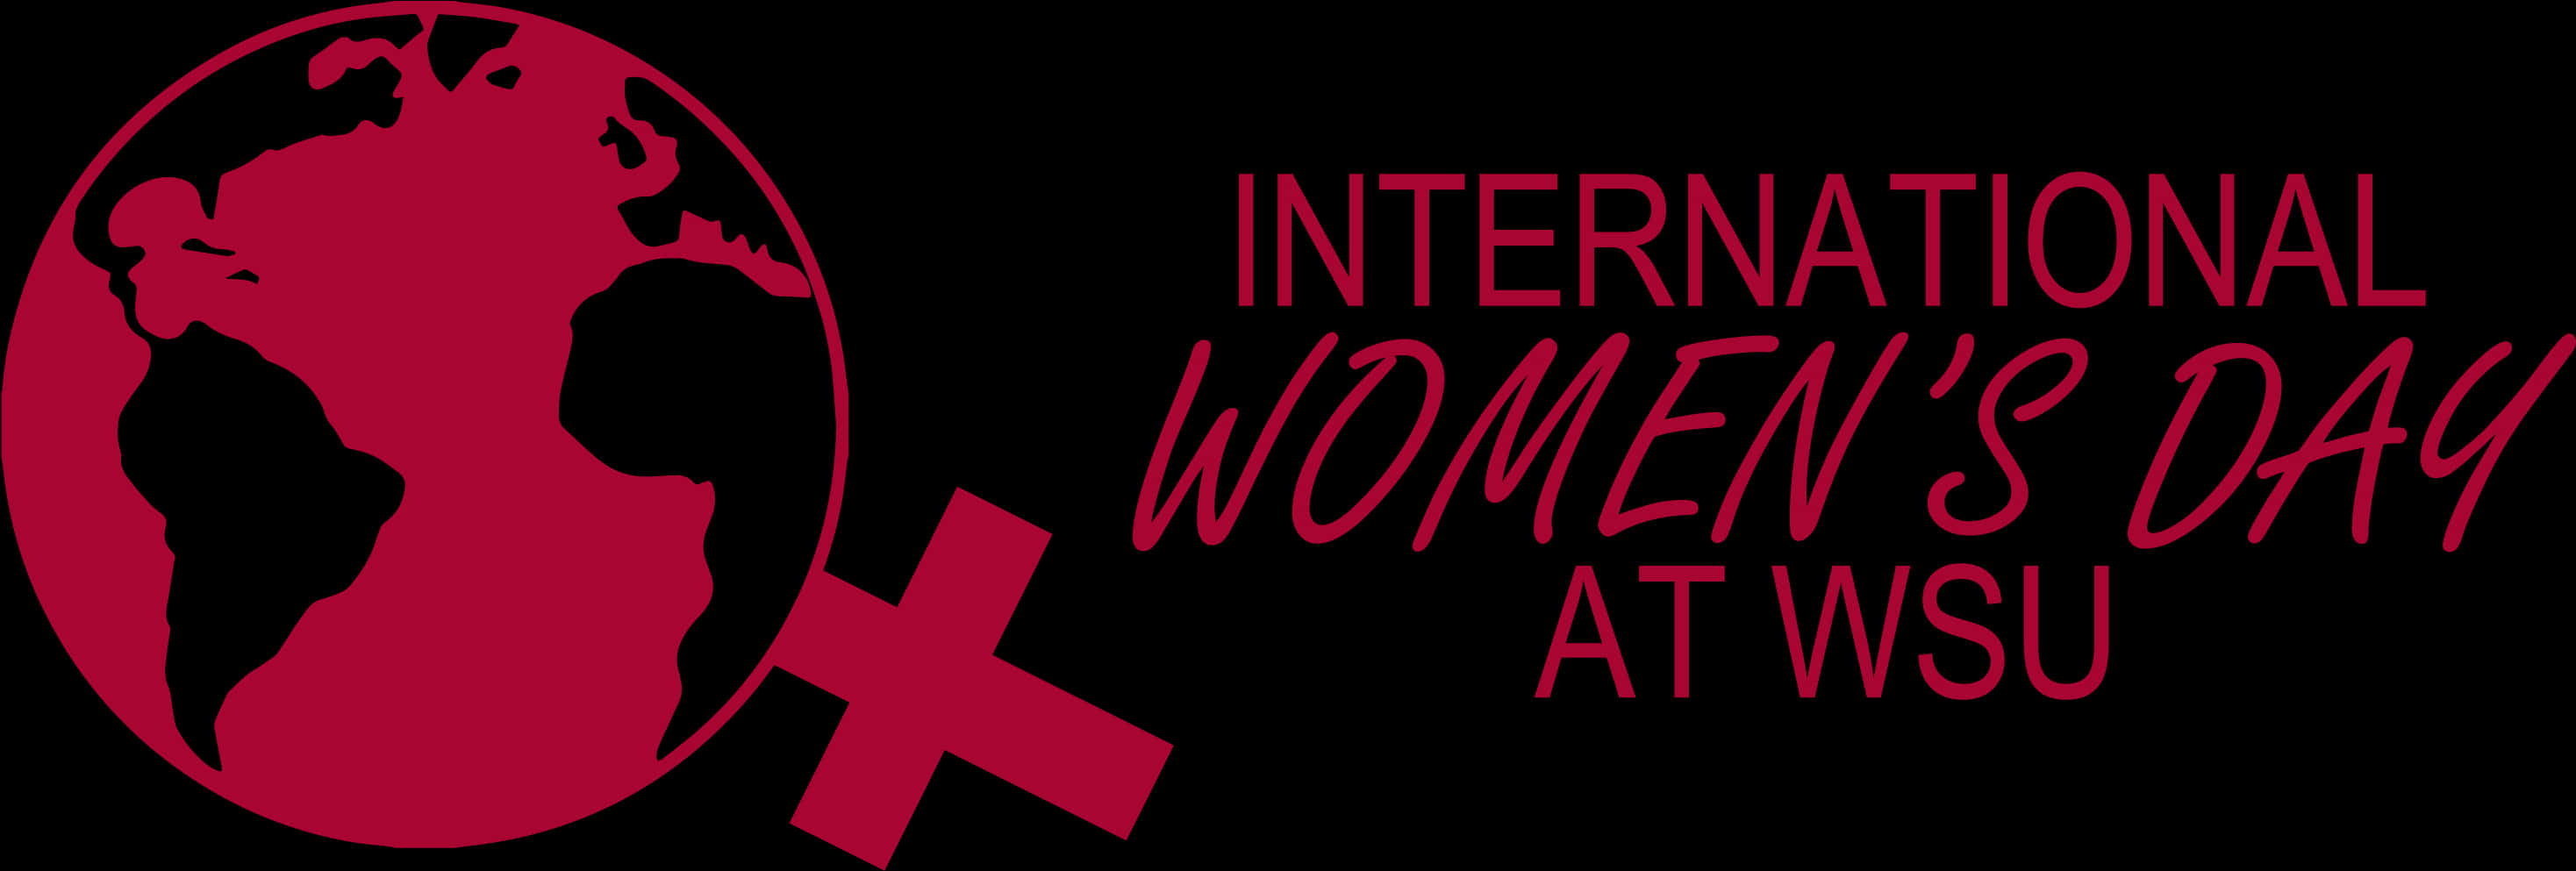 International Womens Day W S U Event Banner